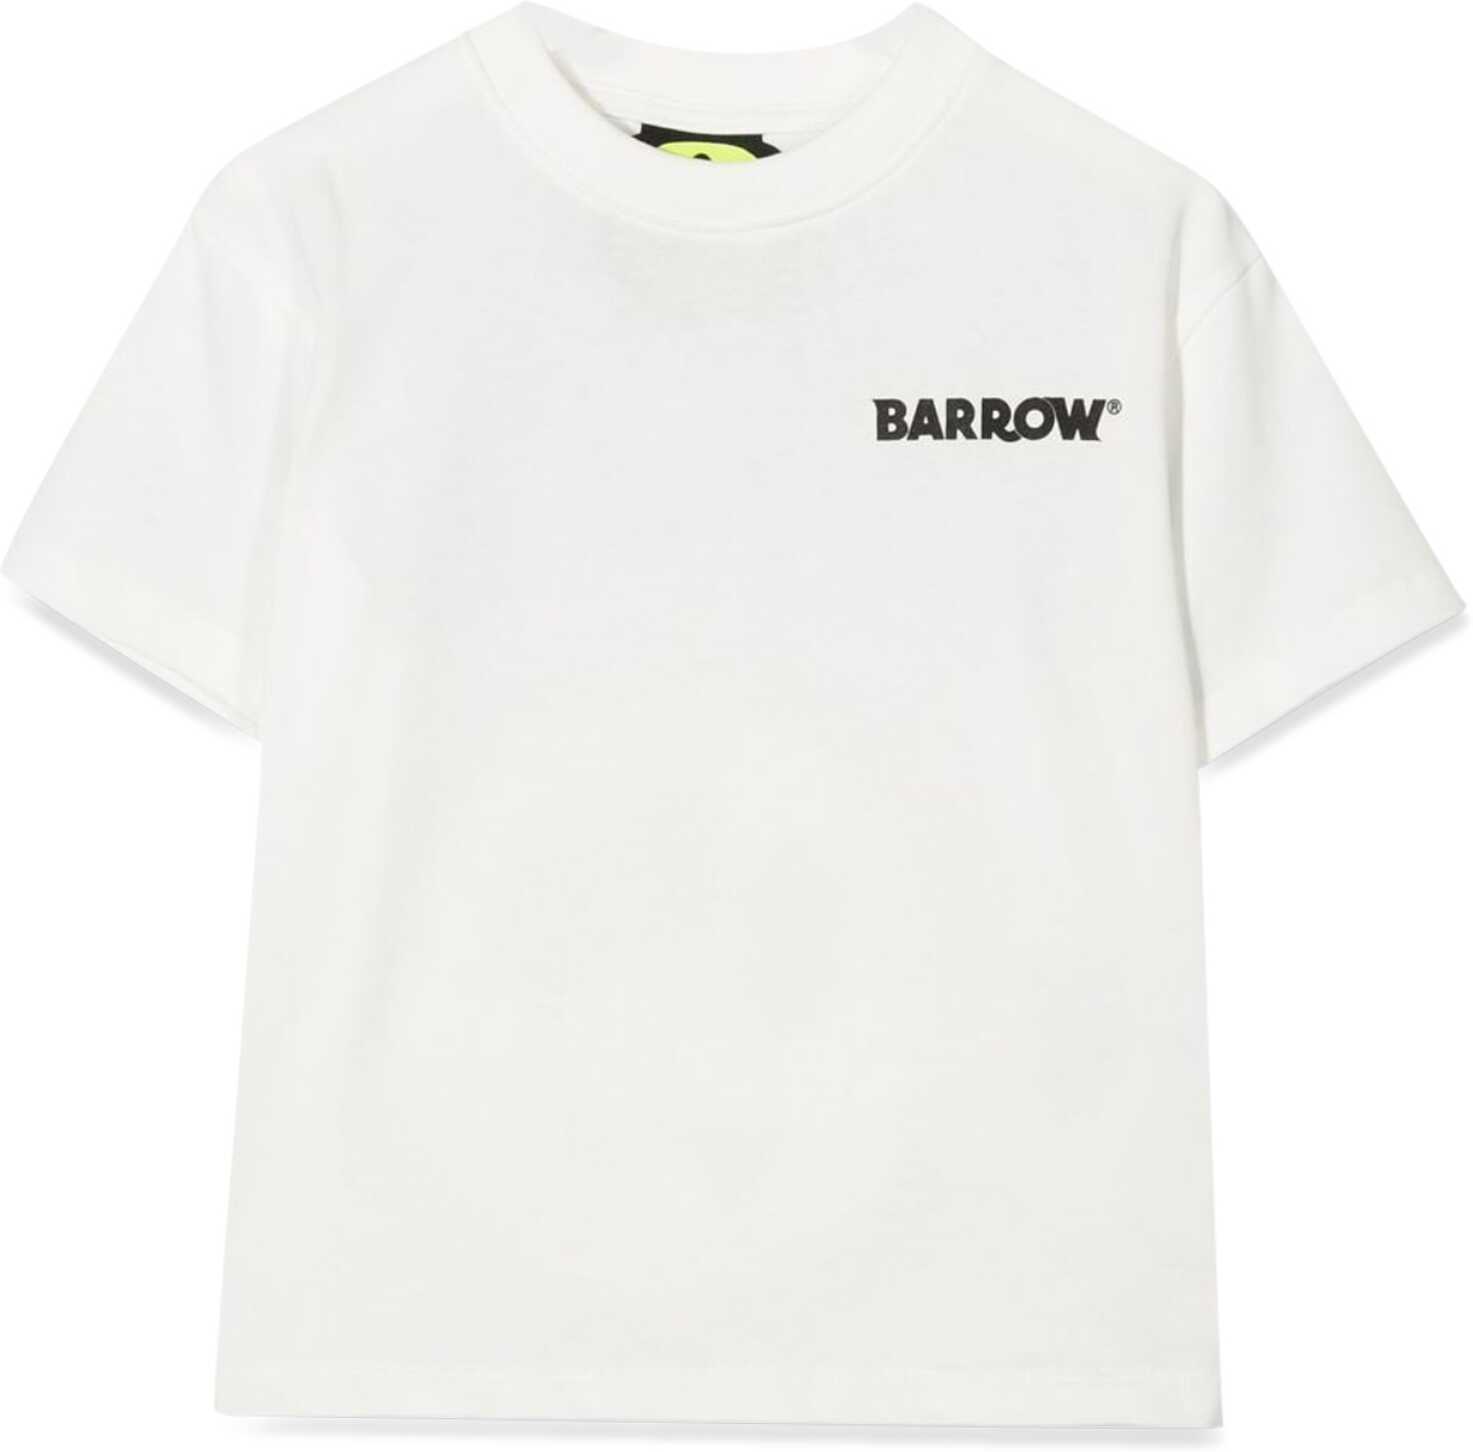 BARROW WHITE